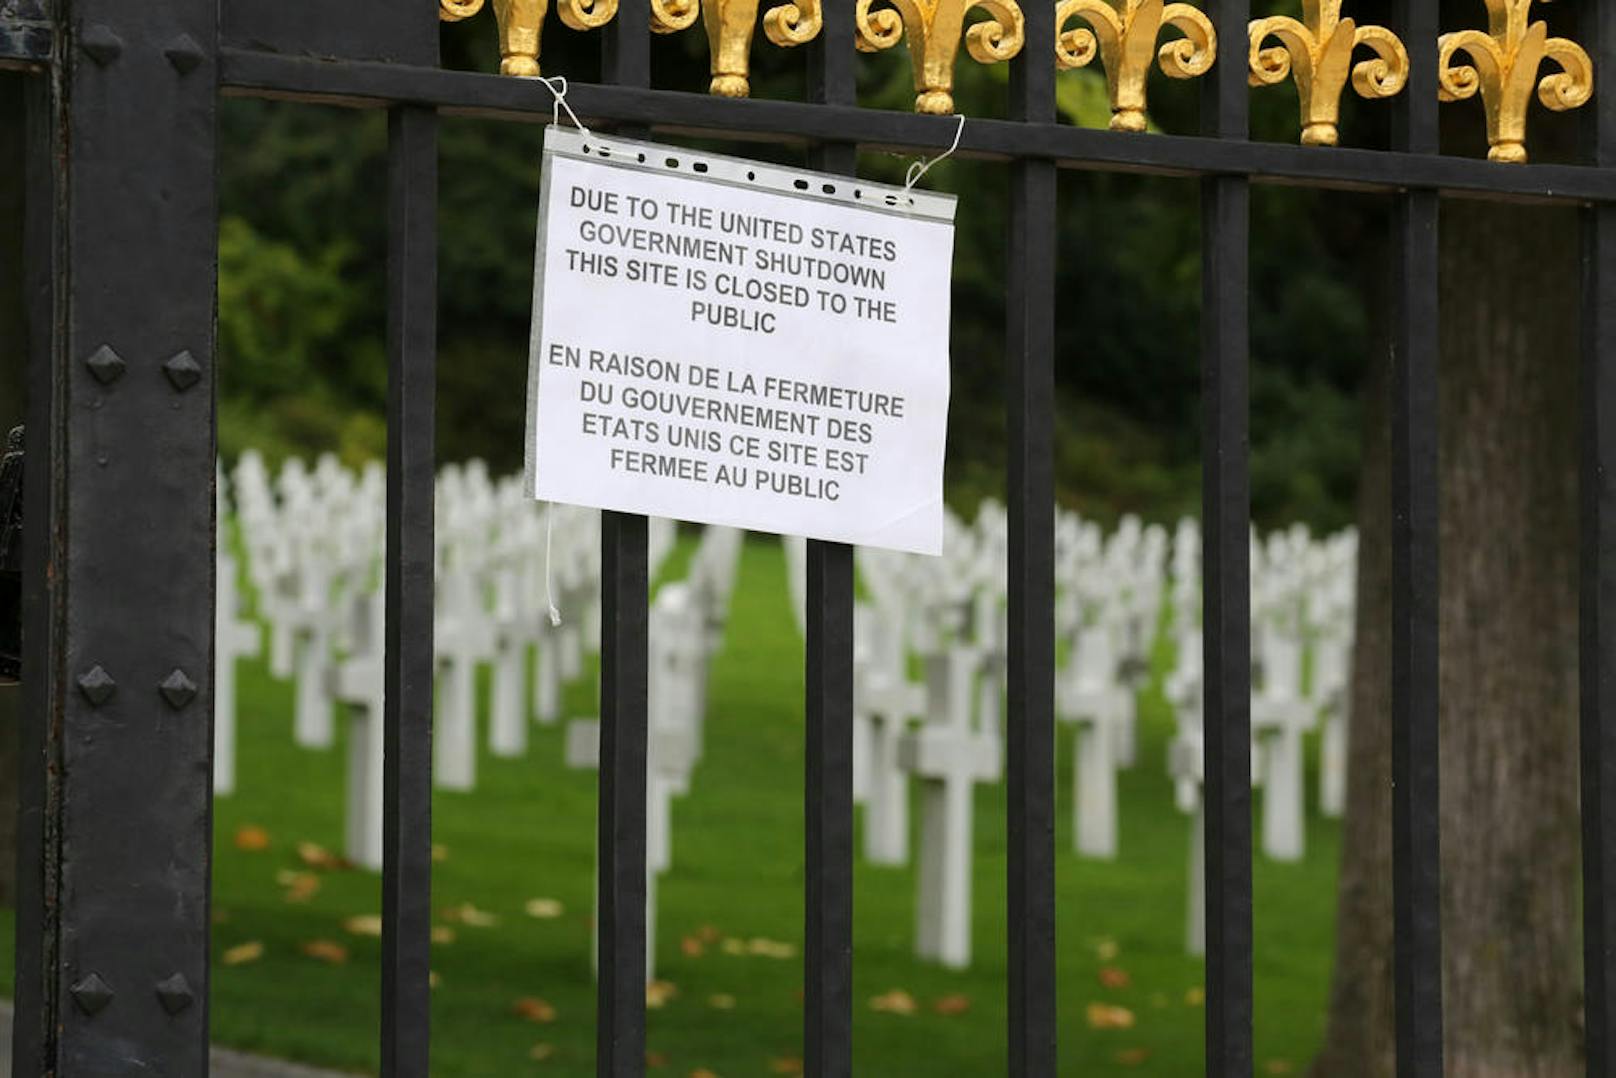 Sogar der Amerikanische Friedhof in Paris bleibt geschlossen.